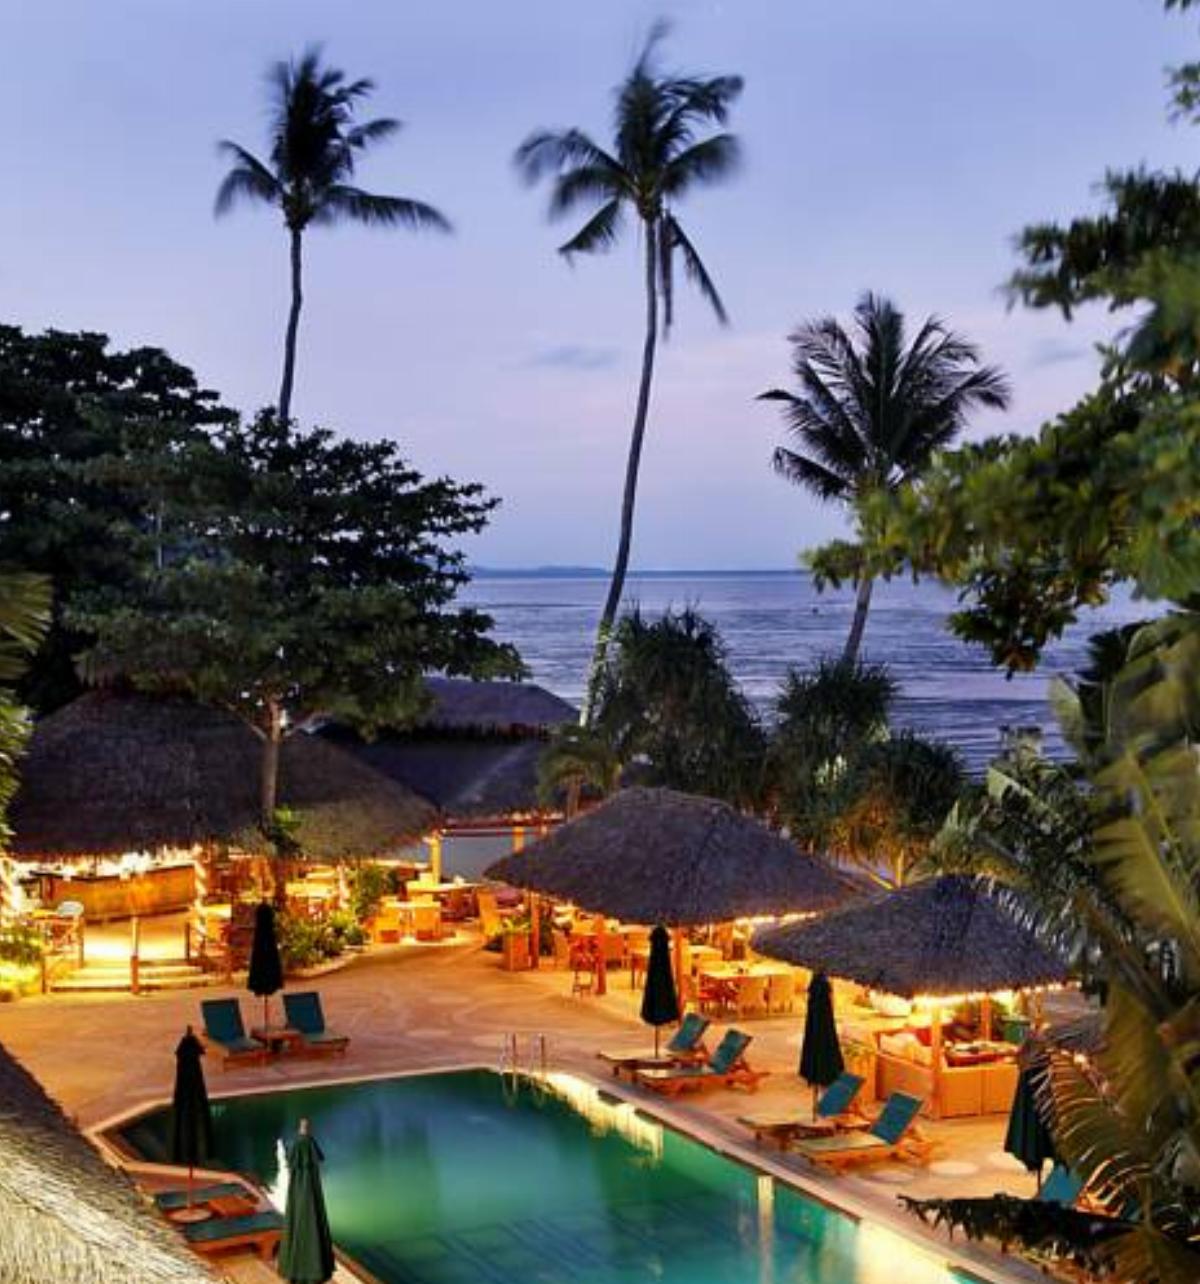 Friendship Beach Resort & Atmanjai Wellness Centre Hotel Rawai Beach Thailand